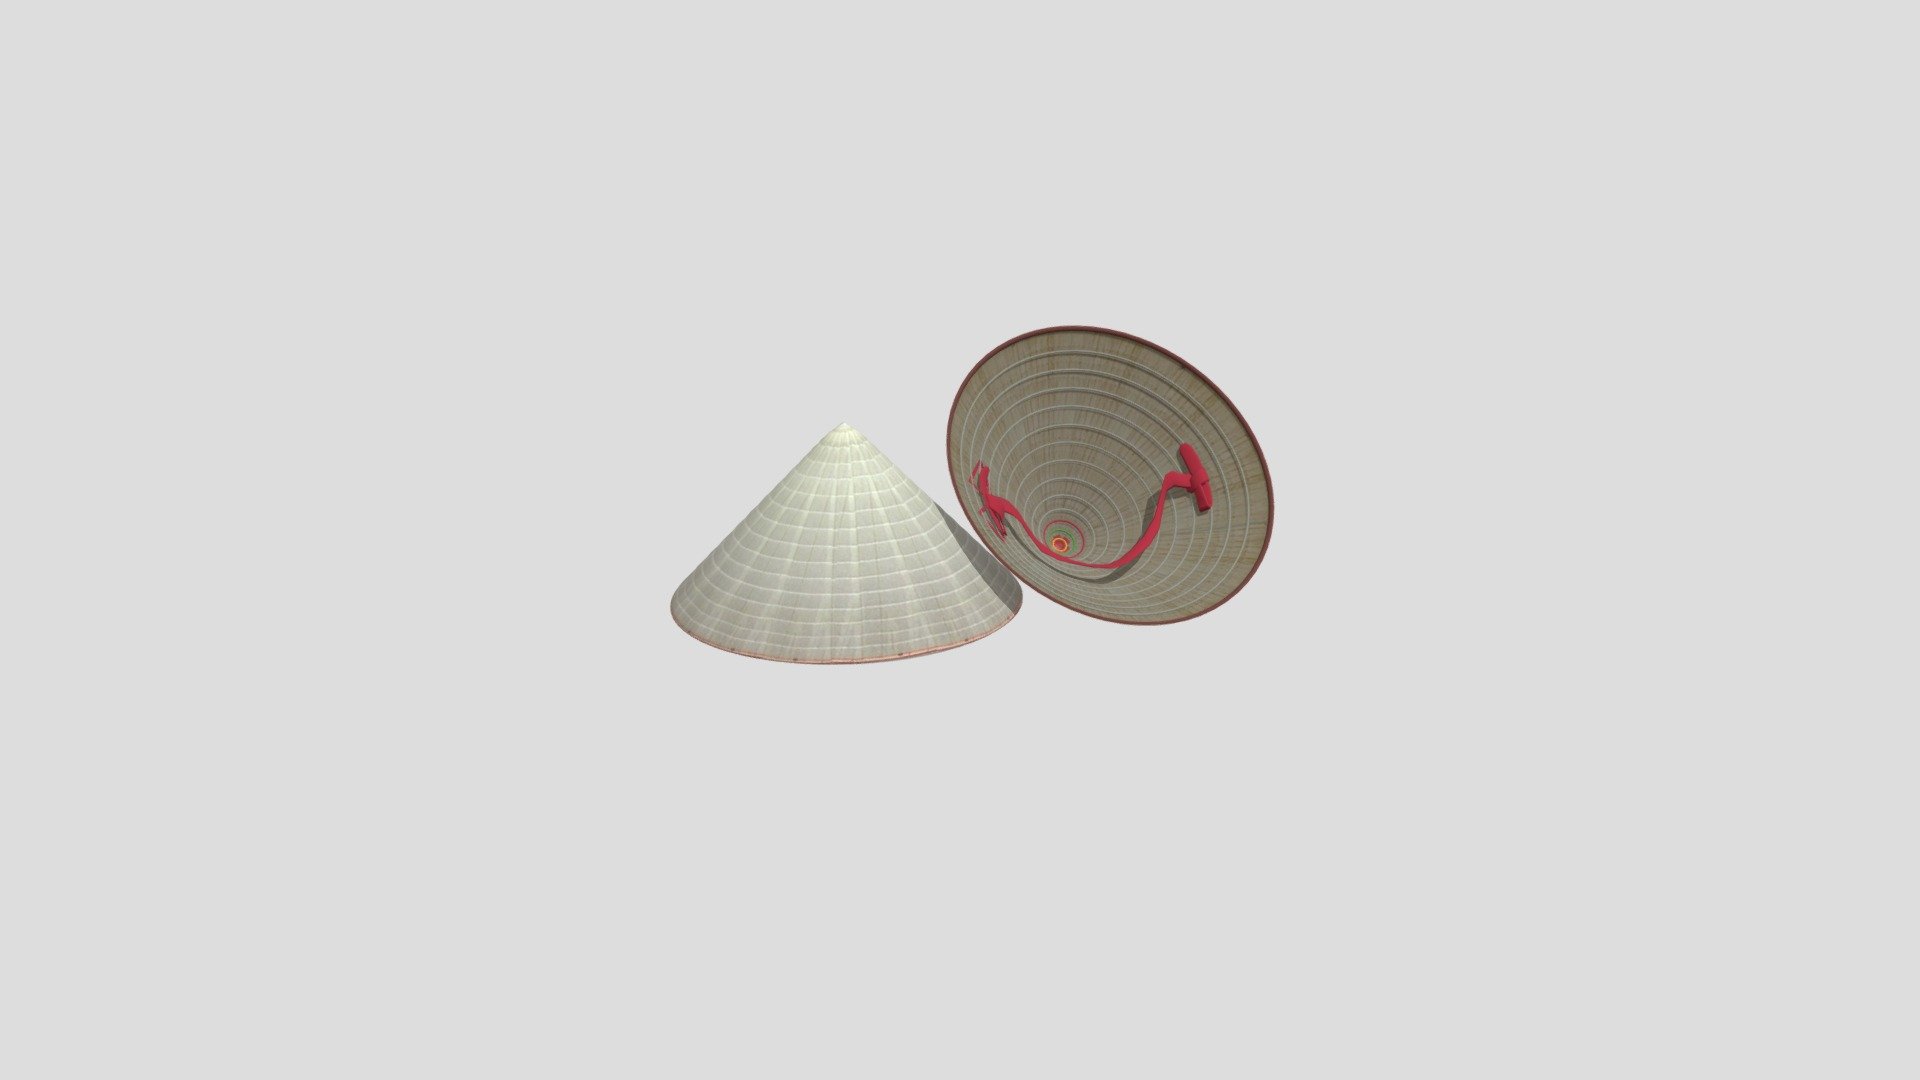 Conical hats, Nón lá, Vietnam hat - Conical hats | Nón Lá Việt Nam - 3D model by hungthinhspk 3d model